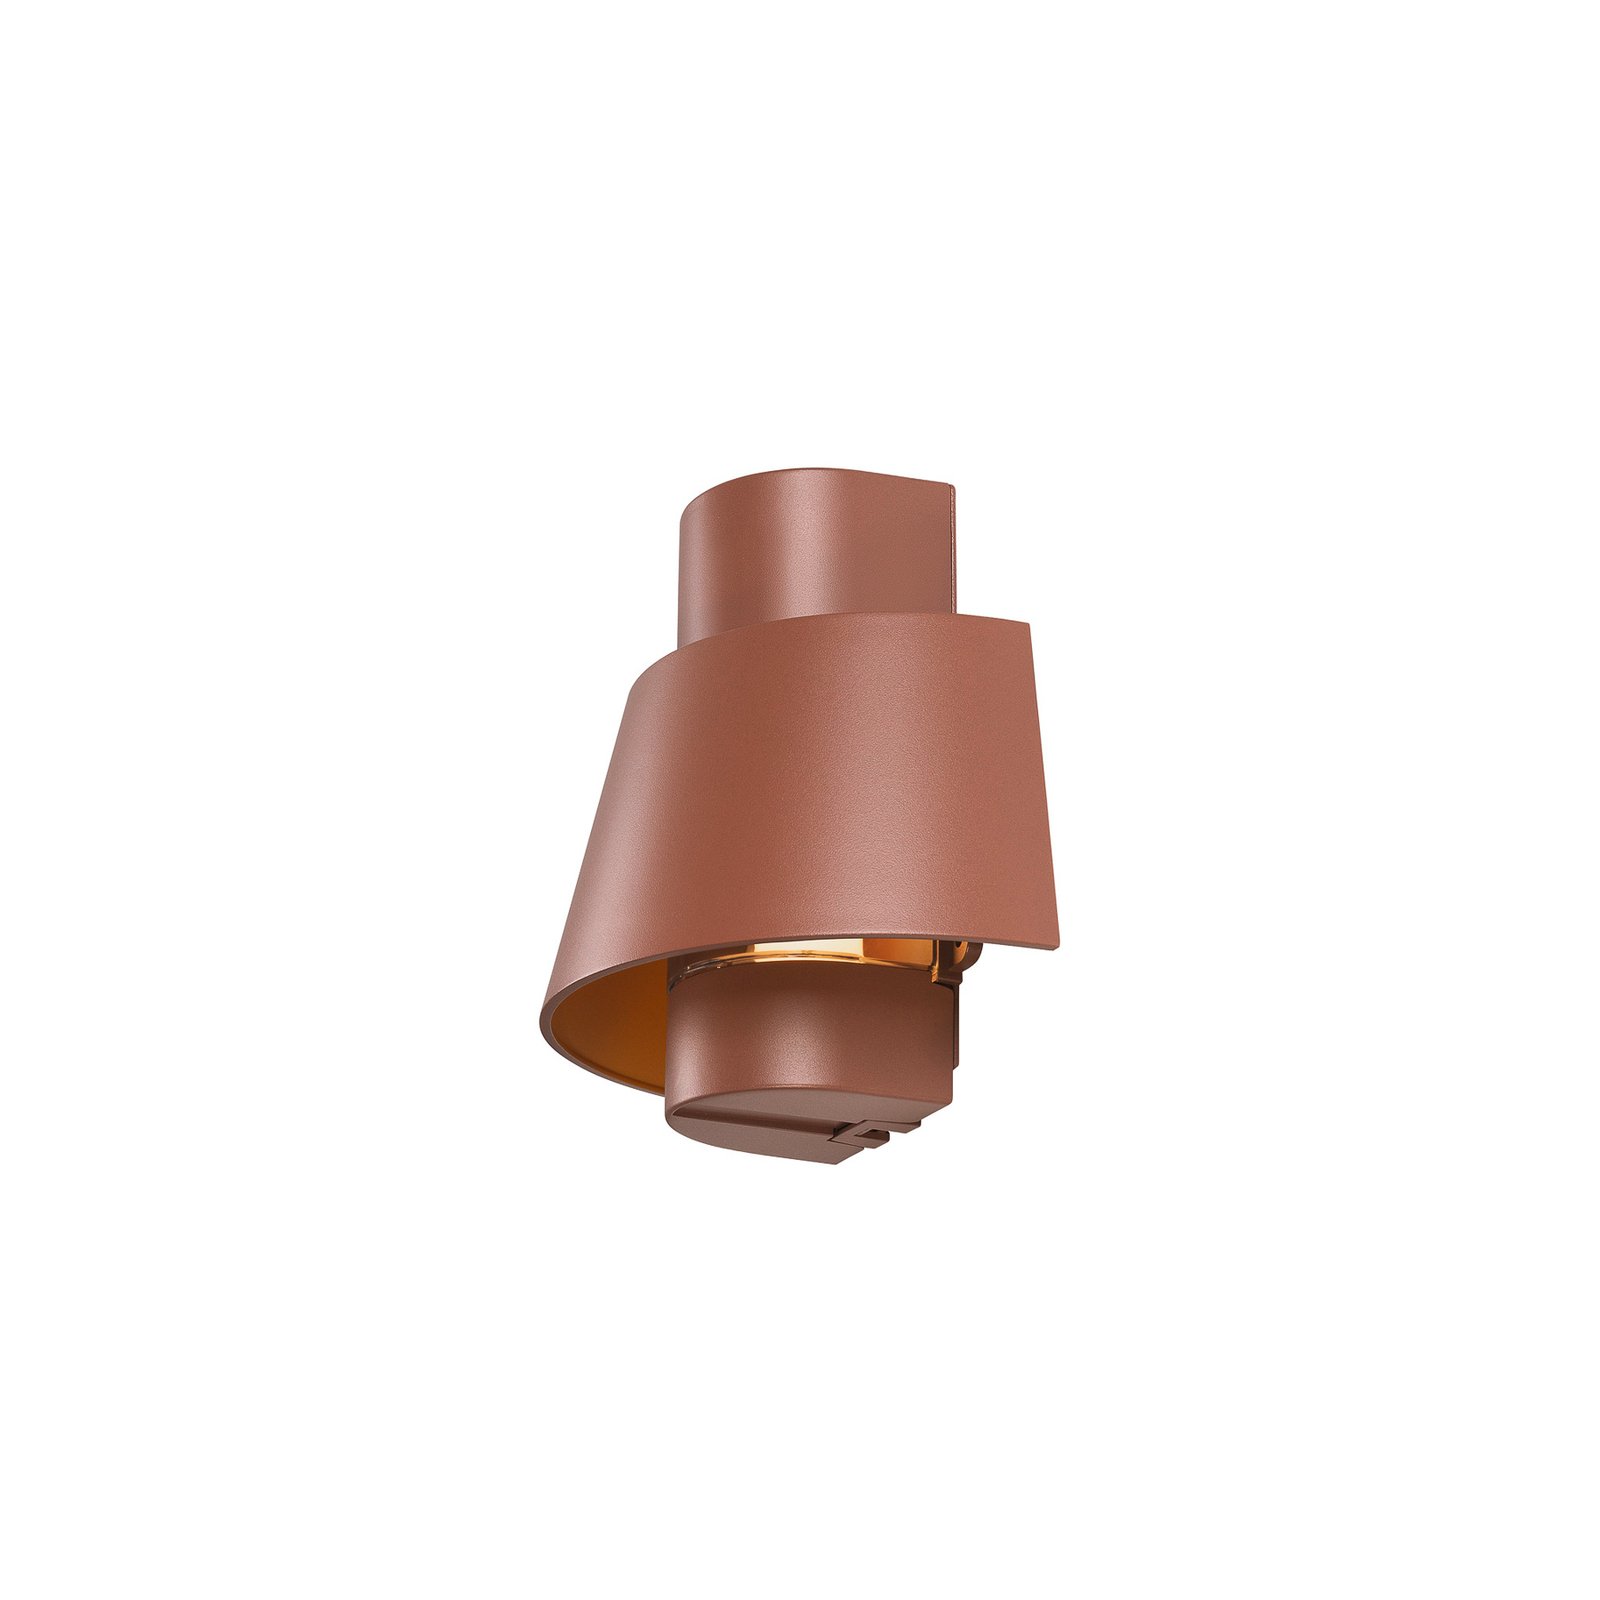 Lampa ścienna SLV Photoni, kolor rdzawy, aluminium, szerokość 25 cm